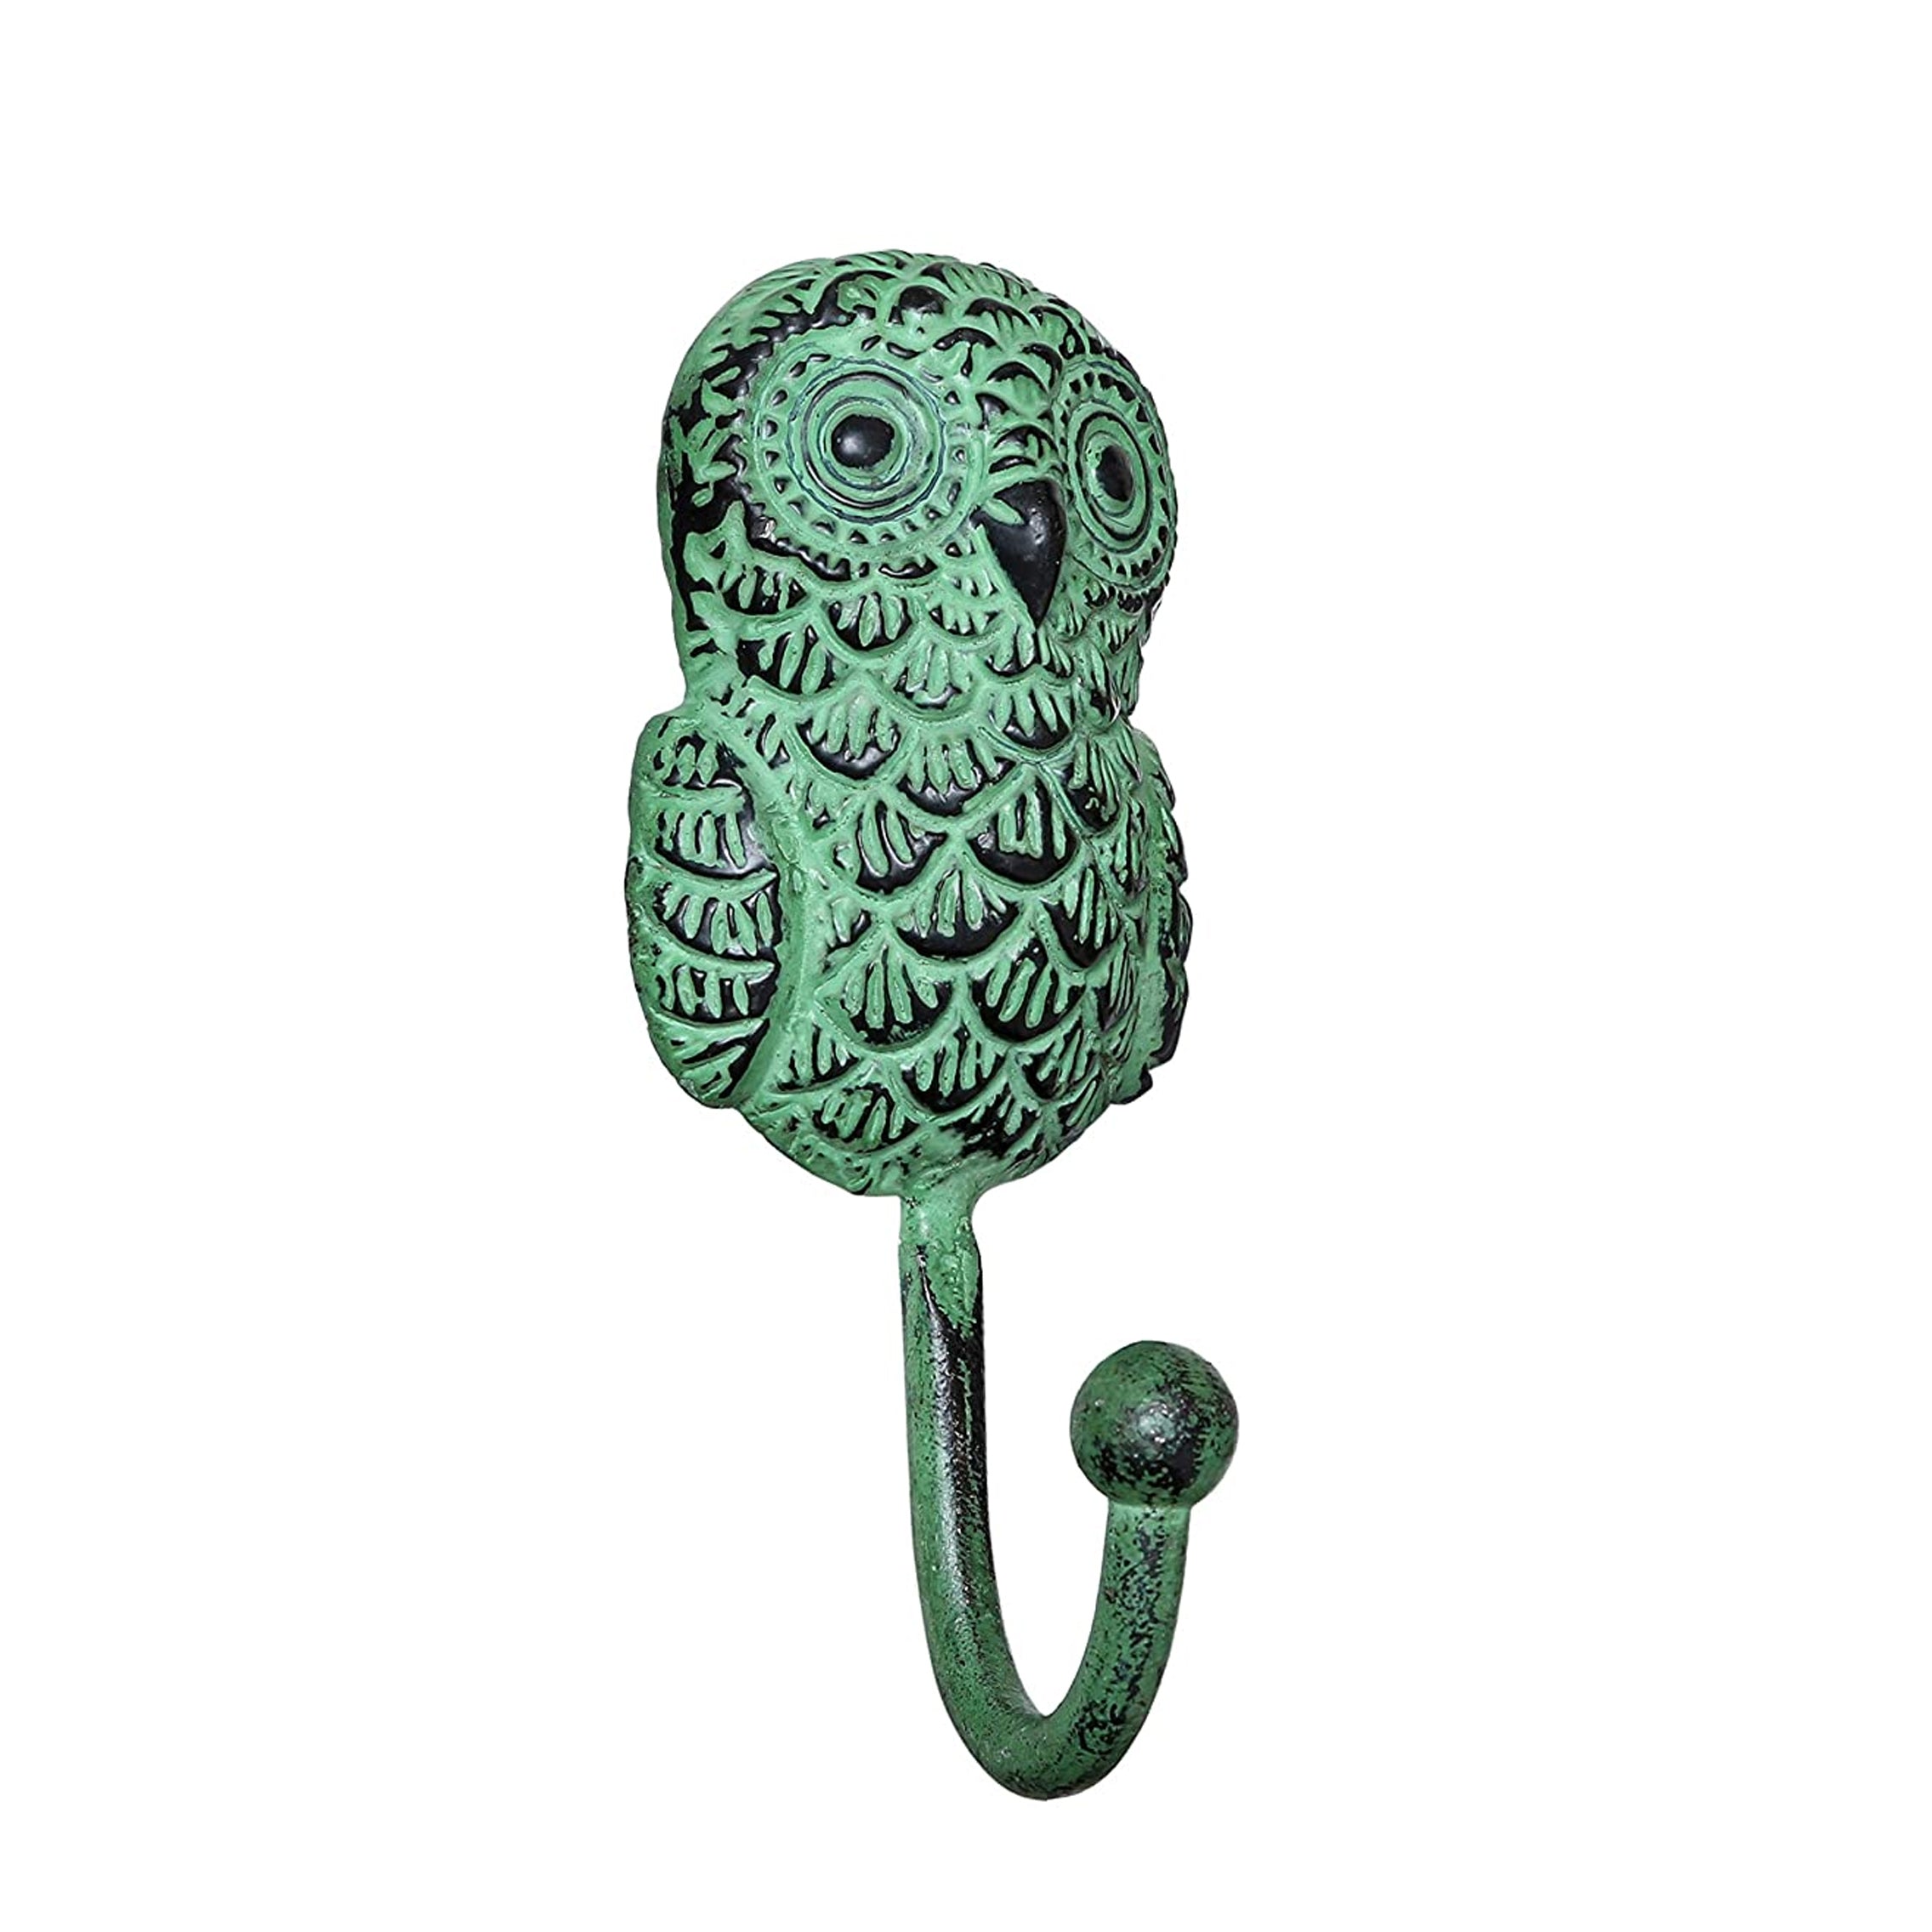 Rustic Owl Design Key Hook - Teal Green